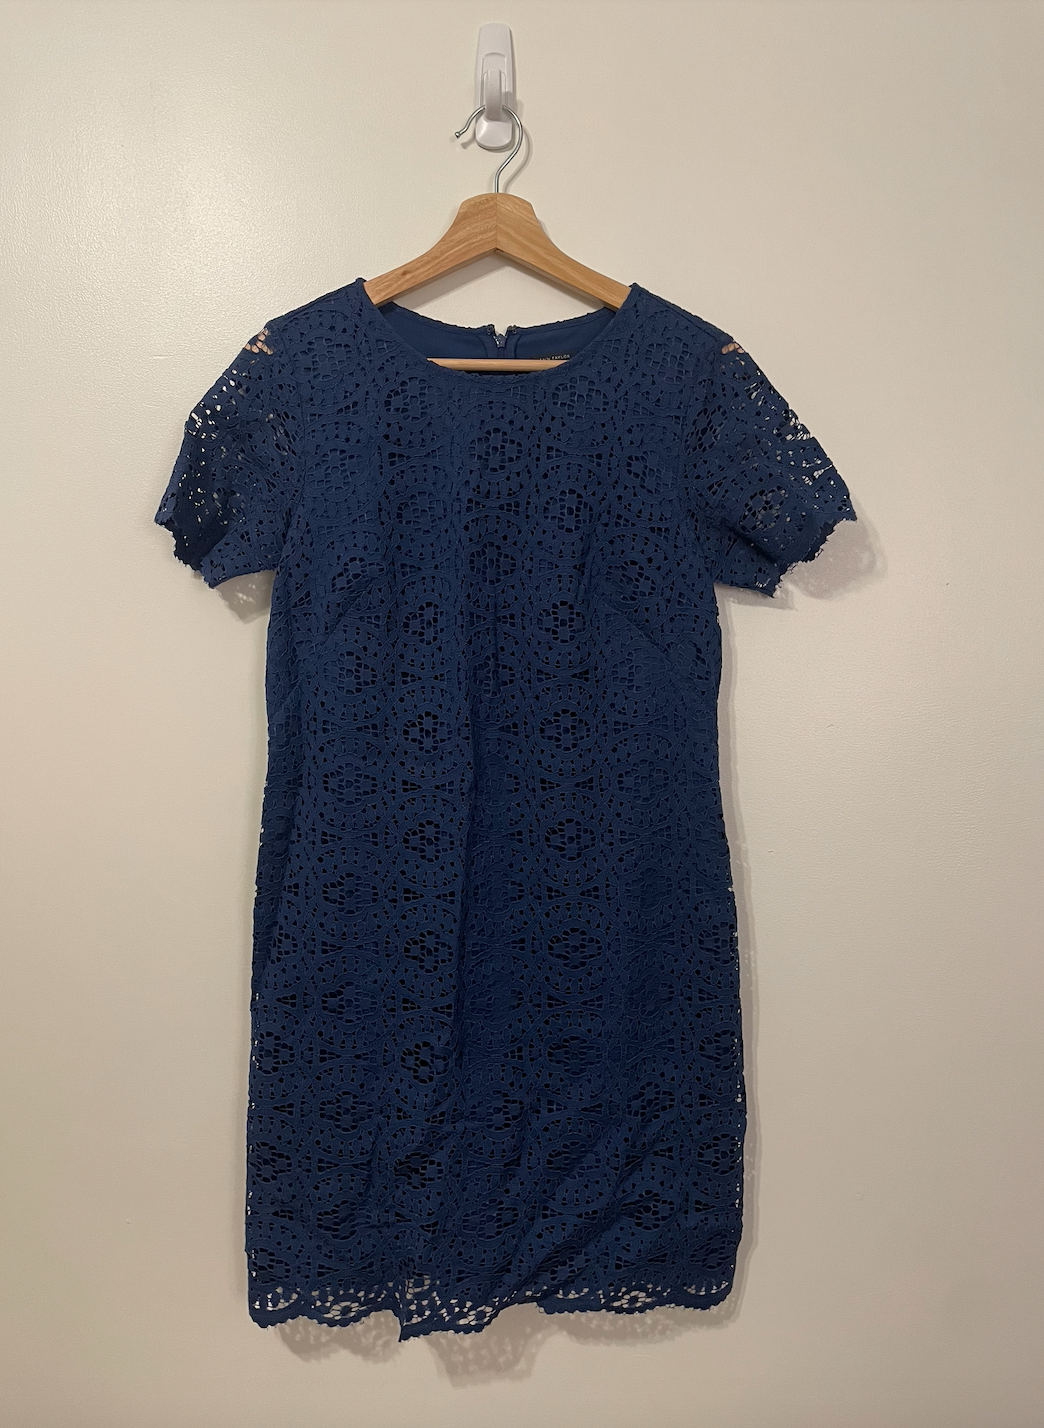 Ann Taylor - size 0 women's dress - navy blue lace - like new